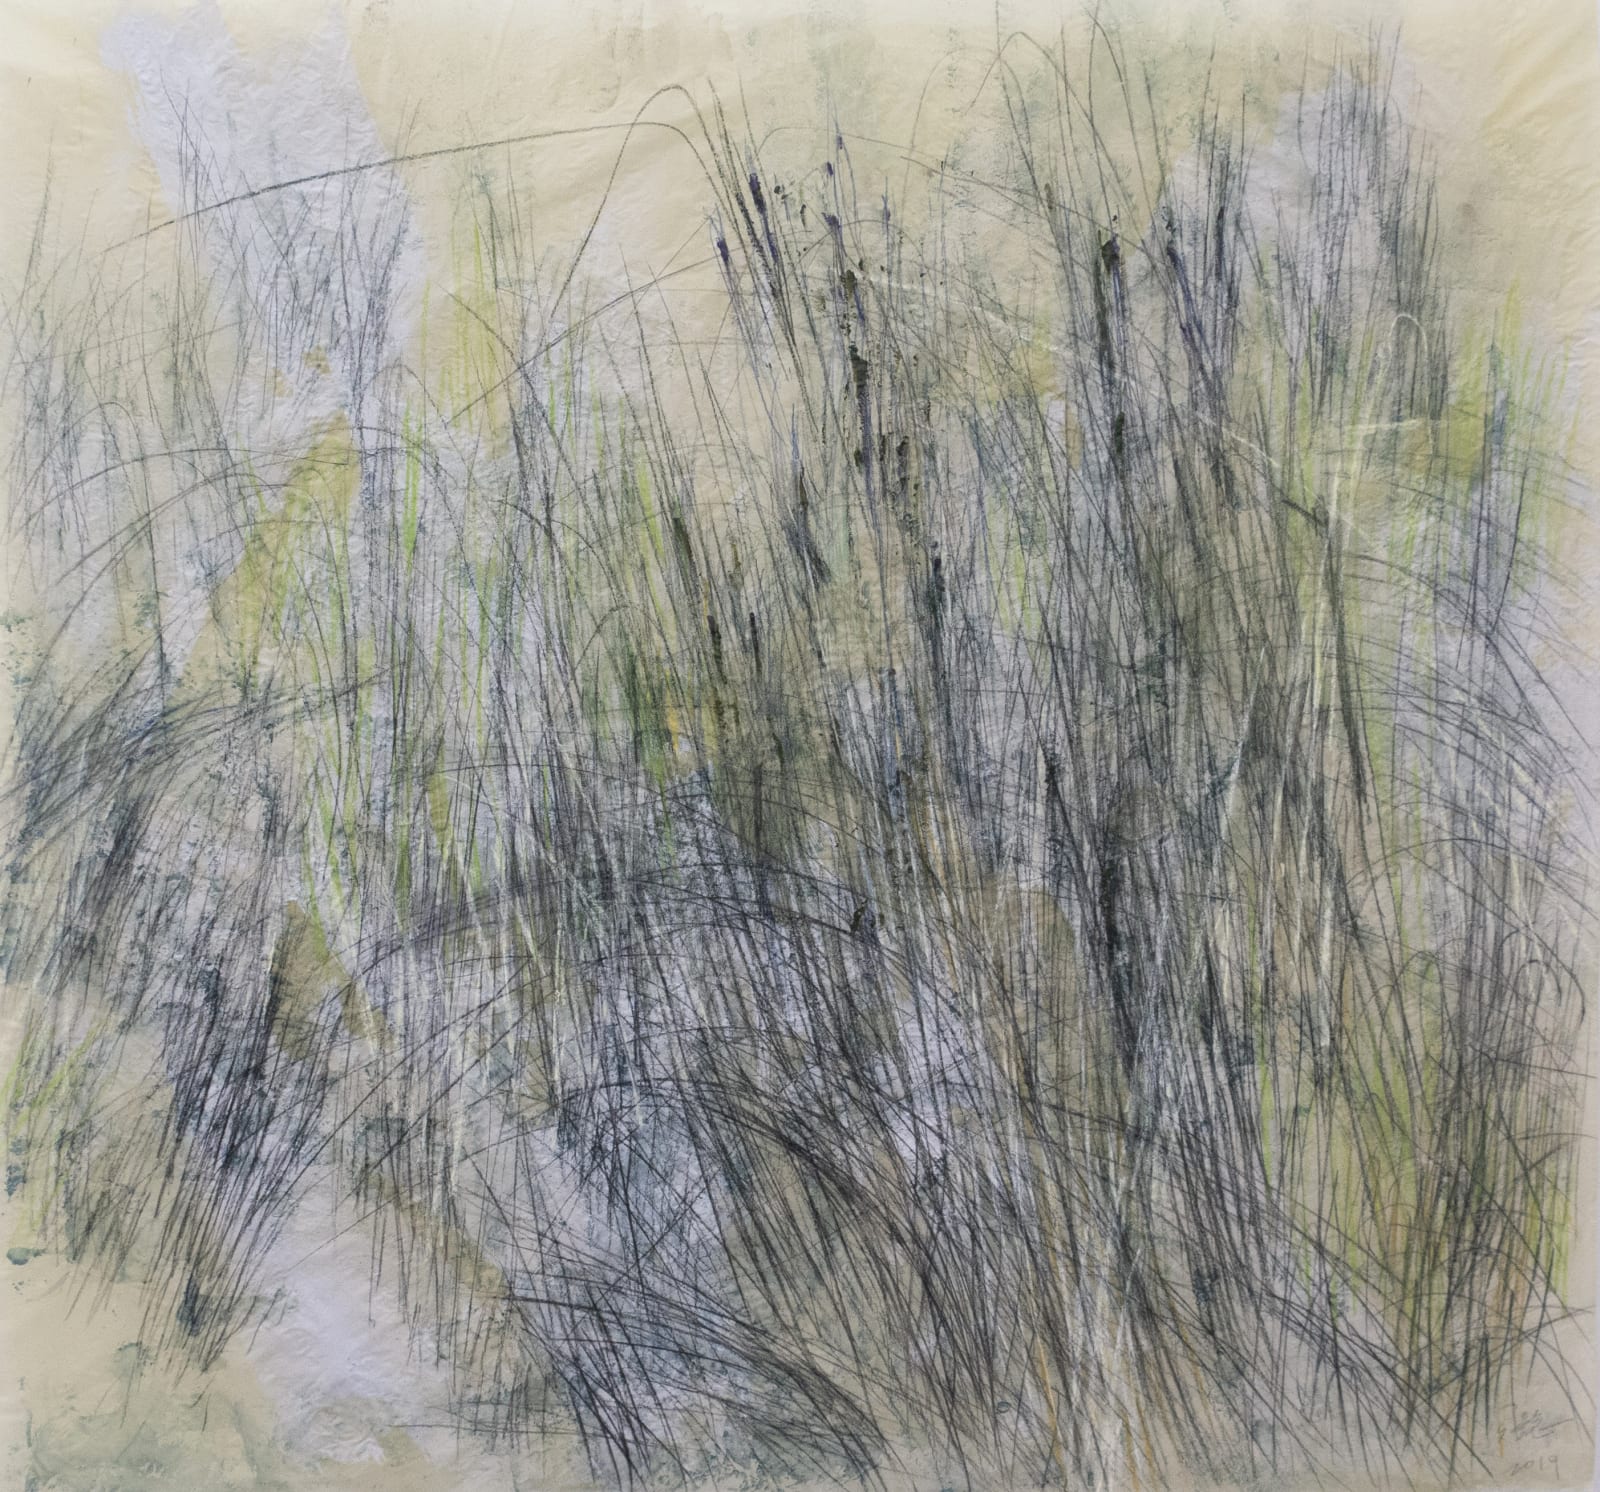 Wang Gongyi 王公懿, Leaves of Grass No. 2 草葉集之二, 2019